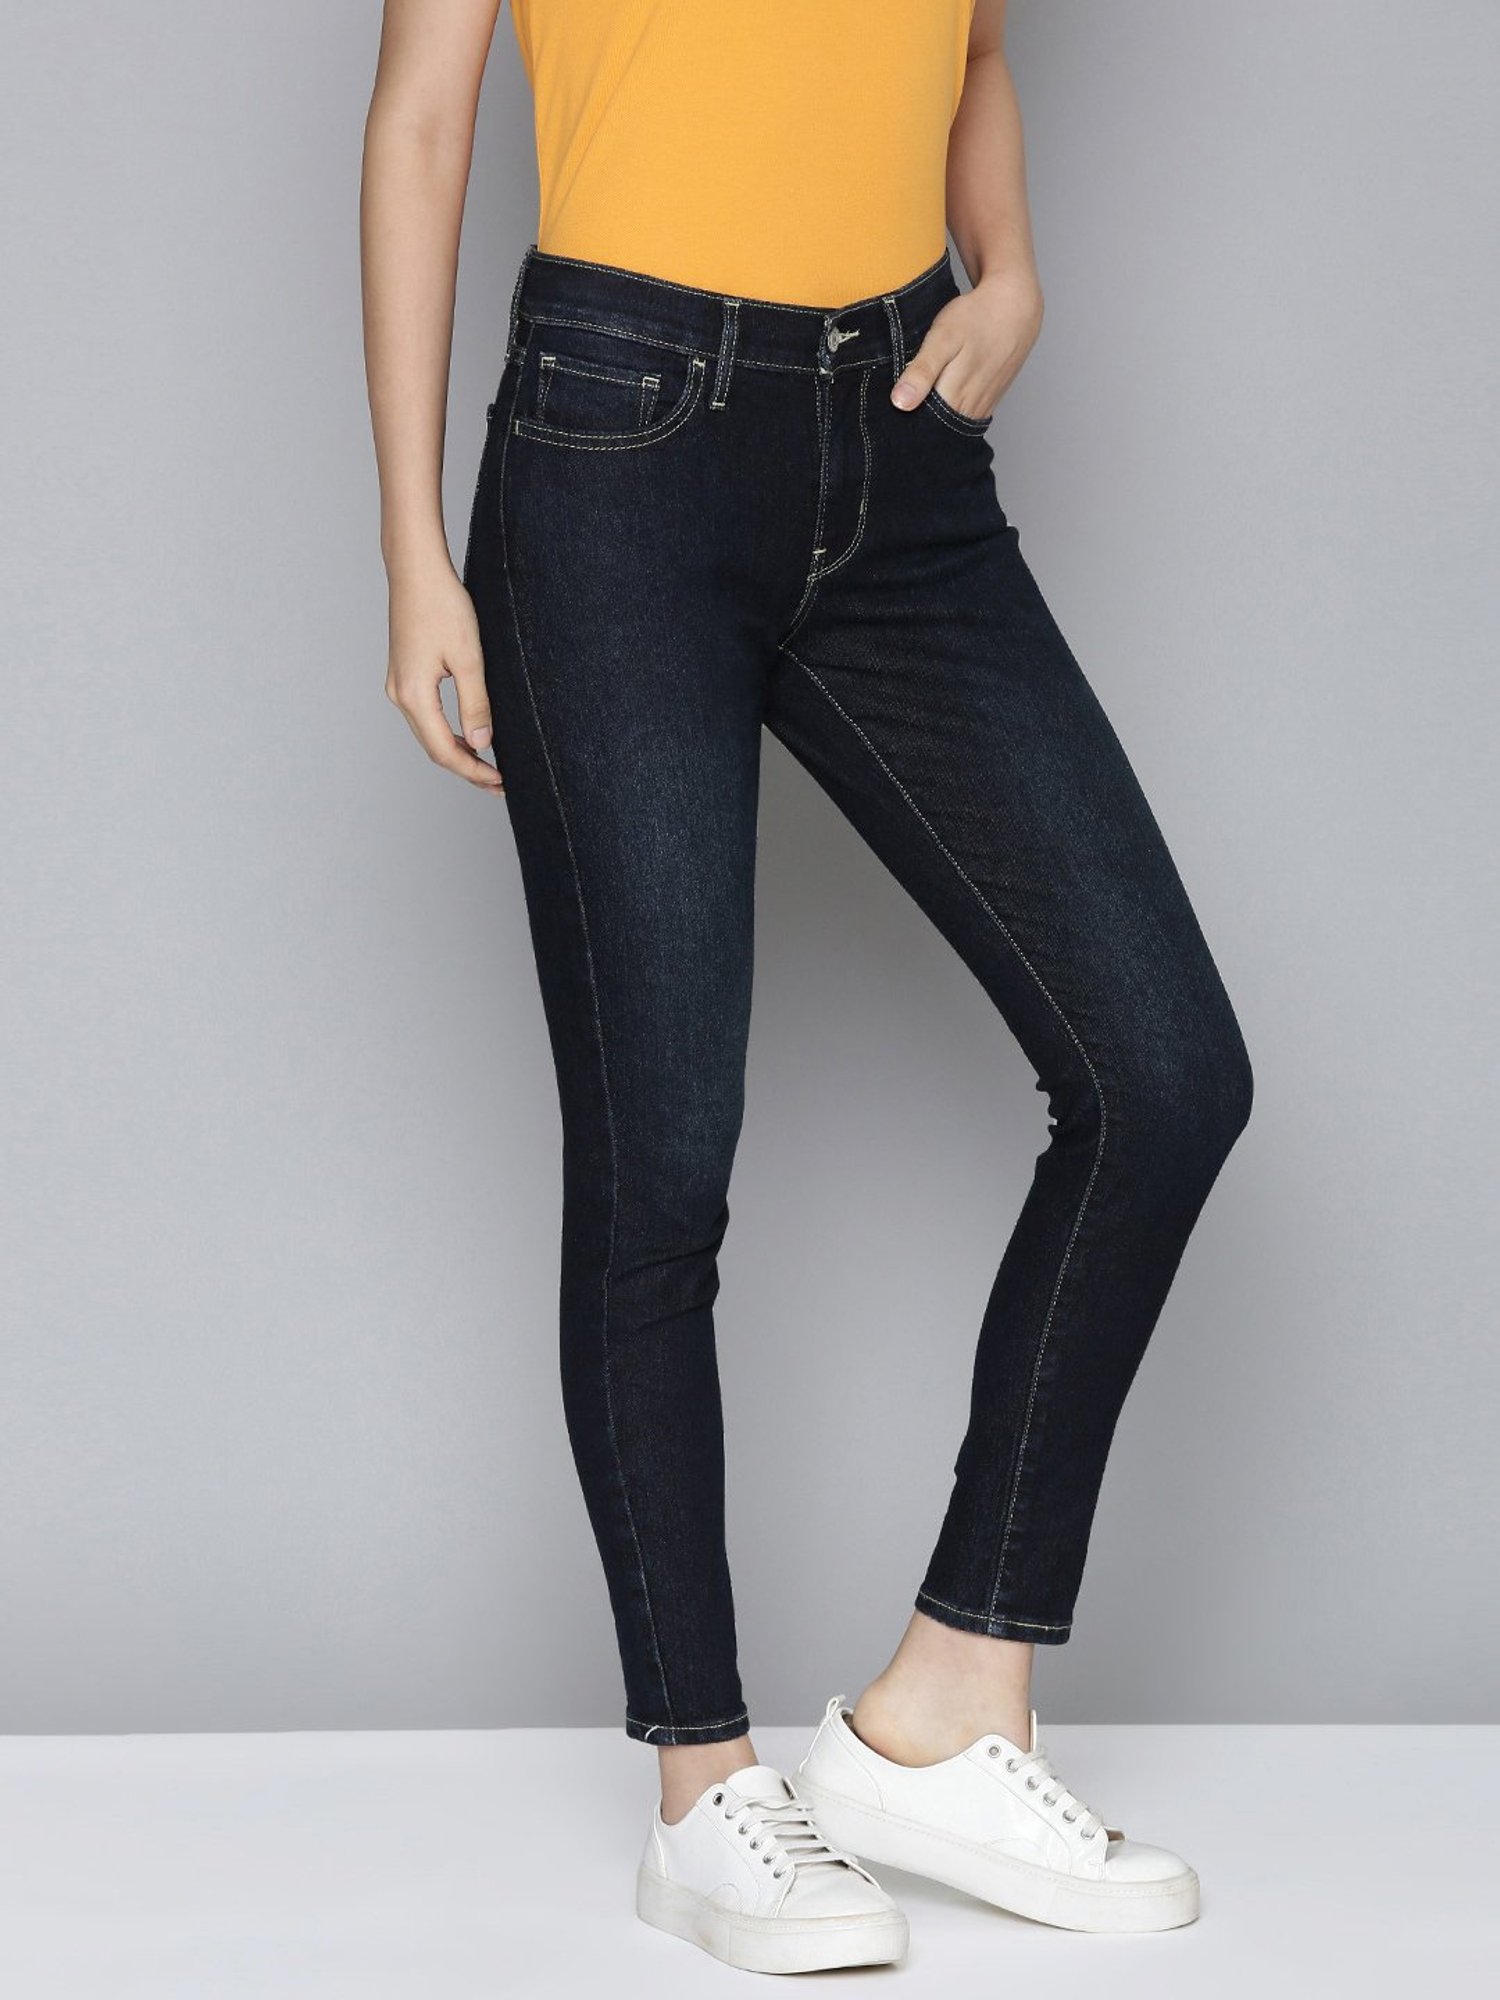 Premium Denim Jeans in Vintage Dark-Wash - Grace and Lace